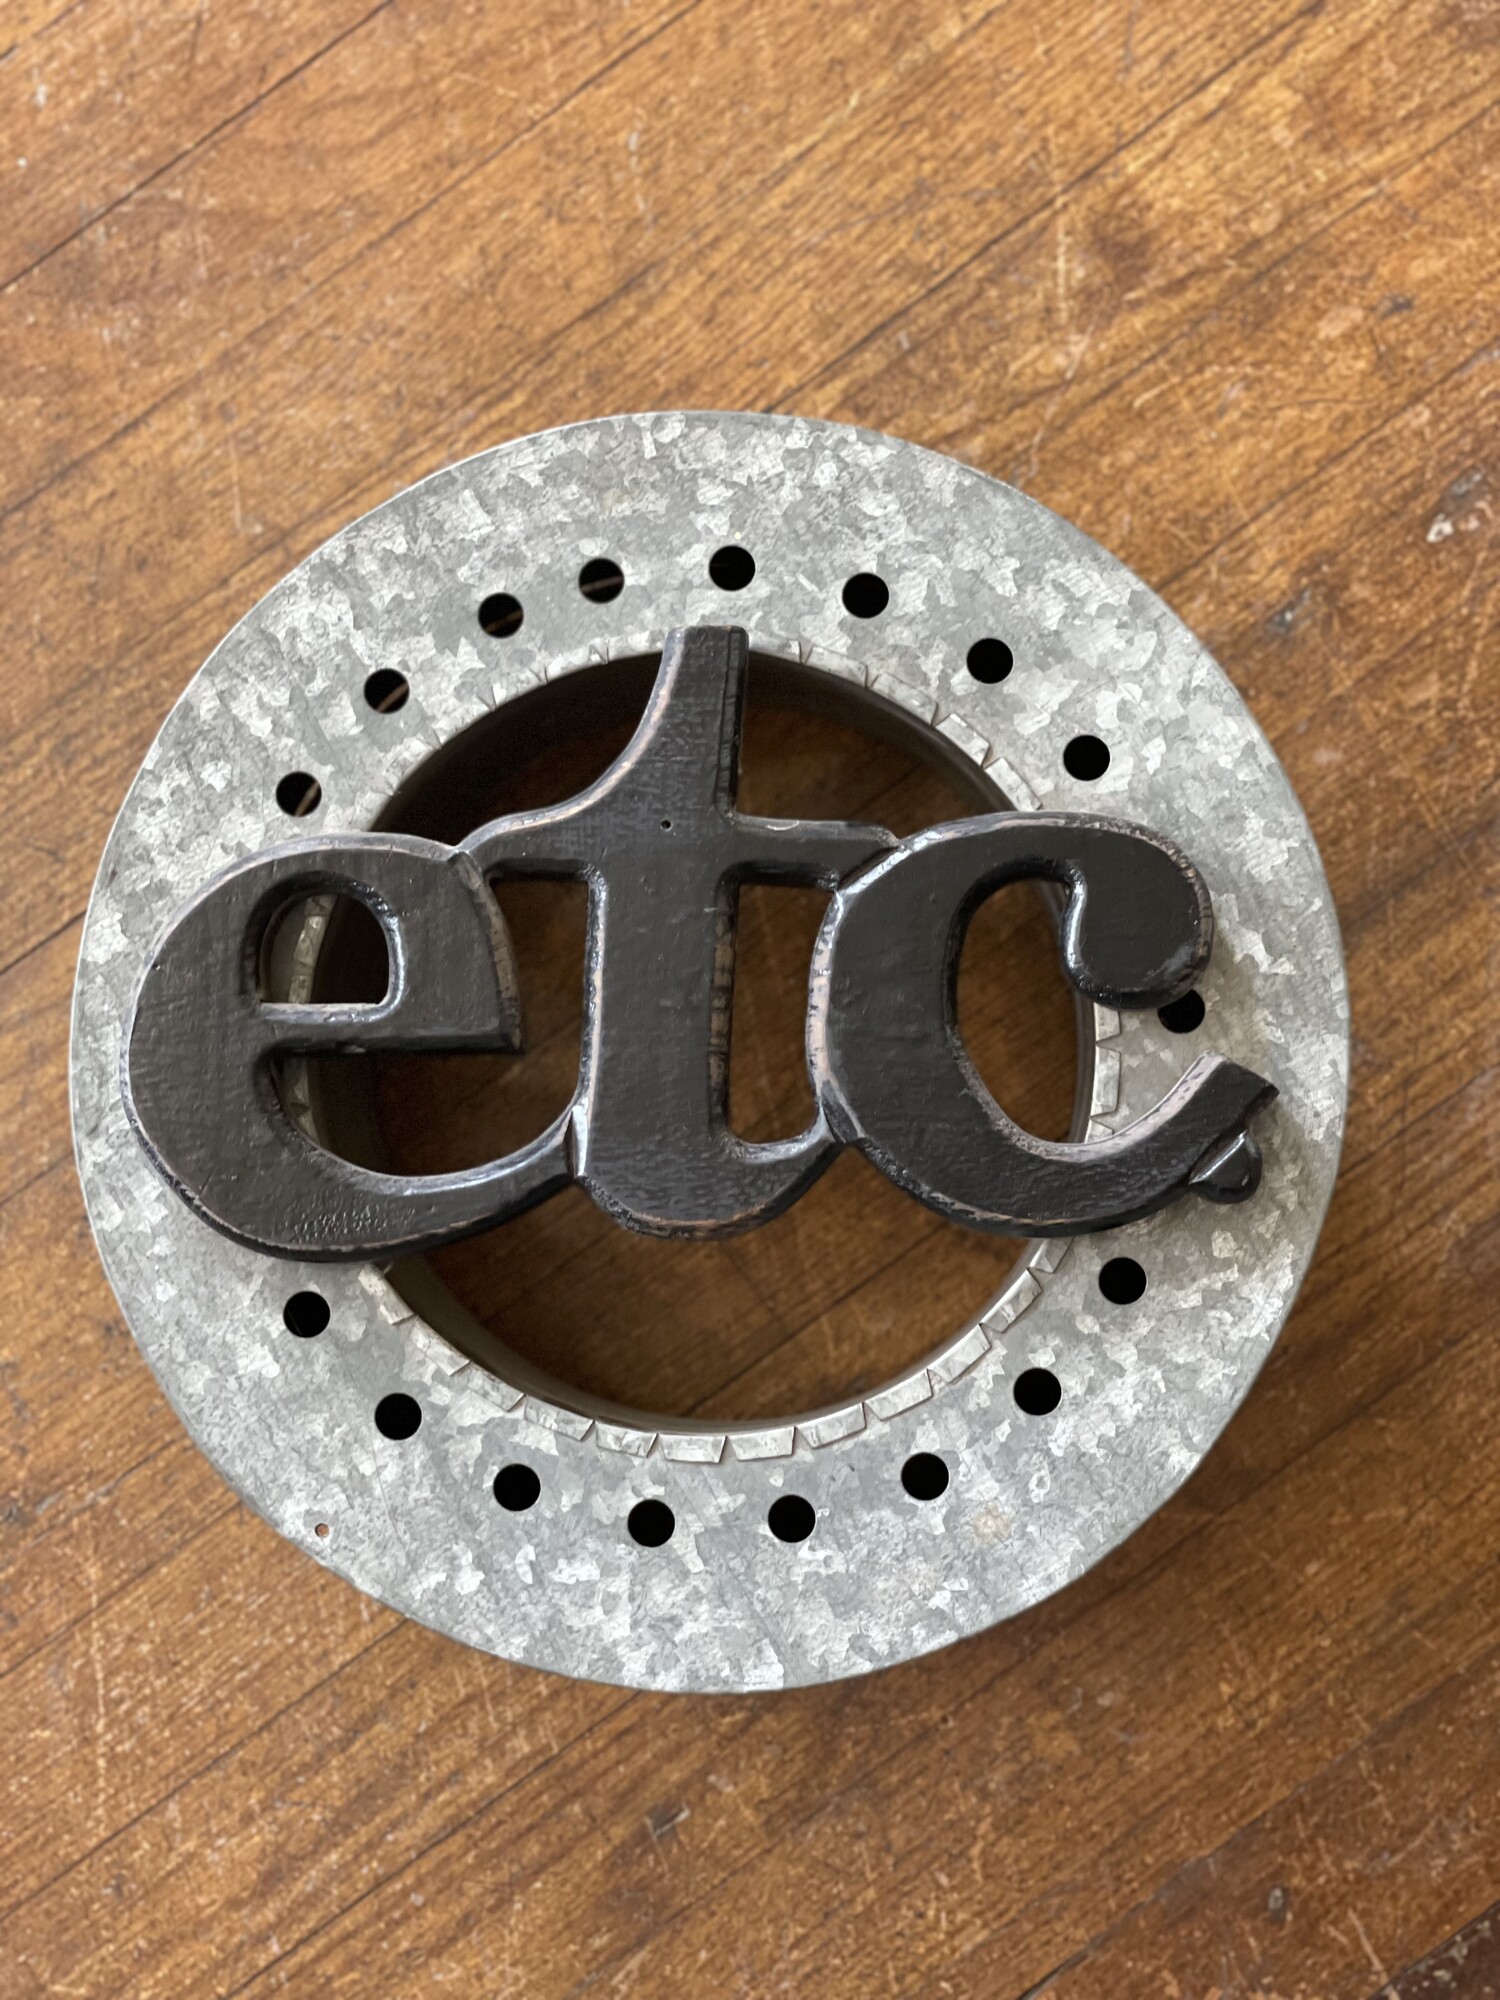 Etc Metal Circle Decor
Galvanized metal and wood
Silver & black
Size: 14x4